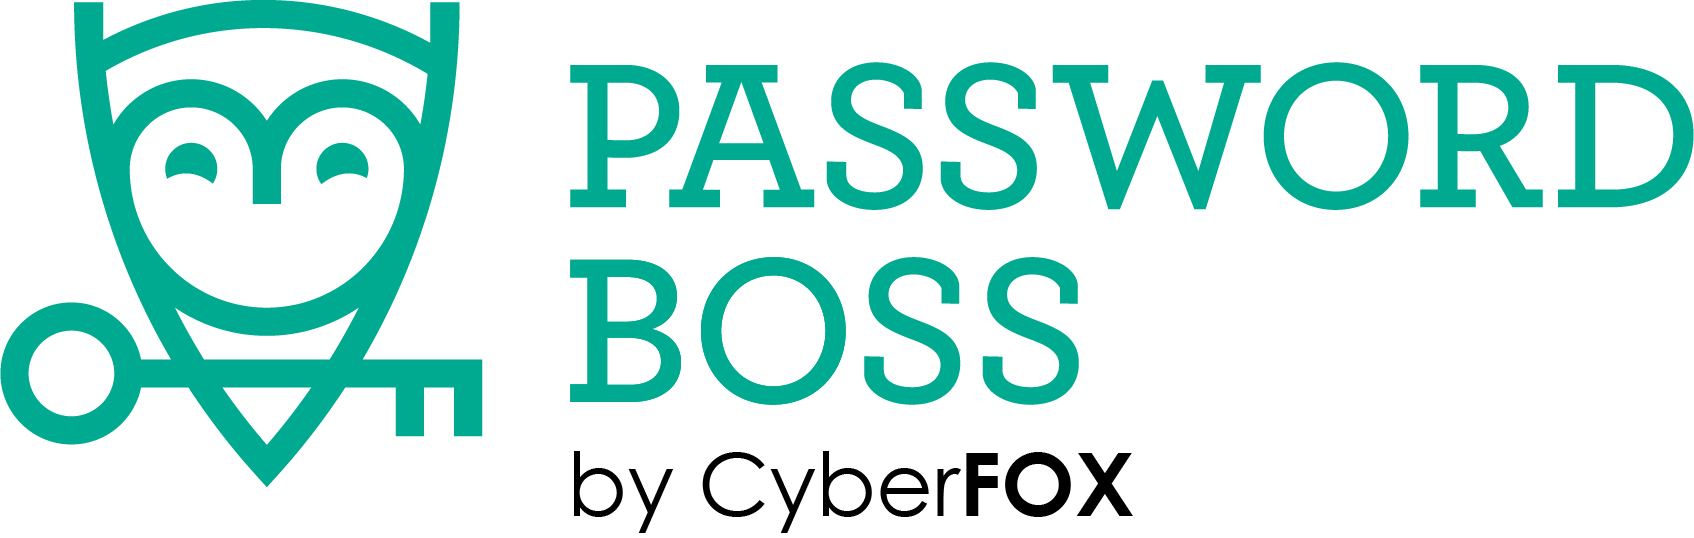 Password Boss Logo